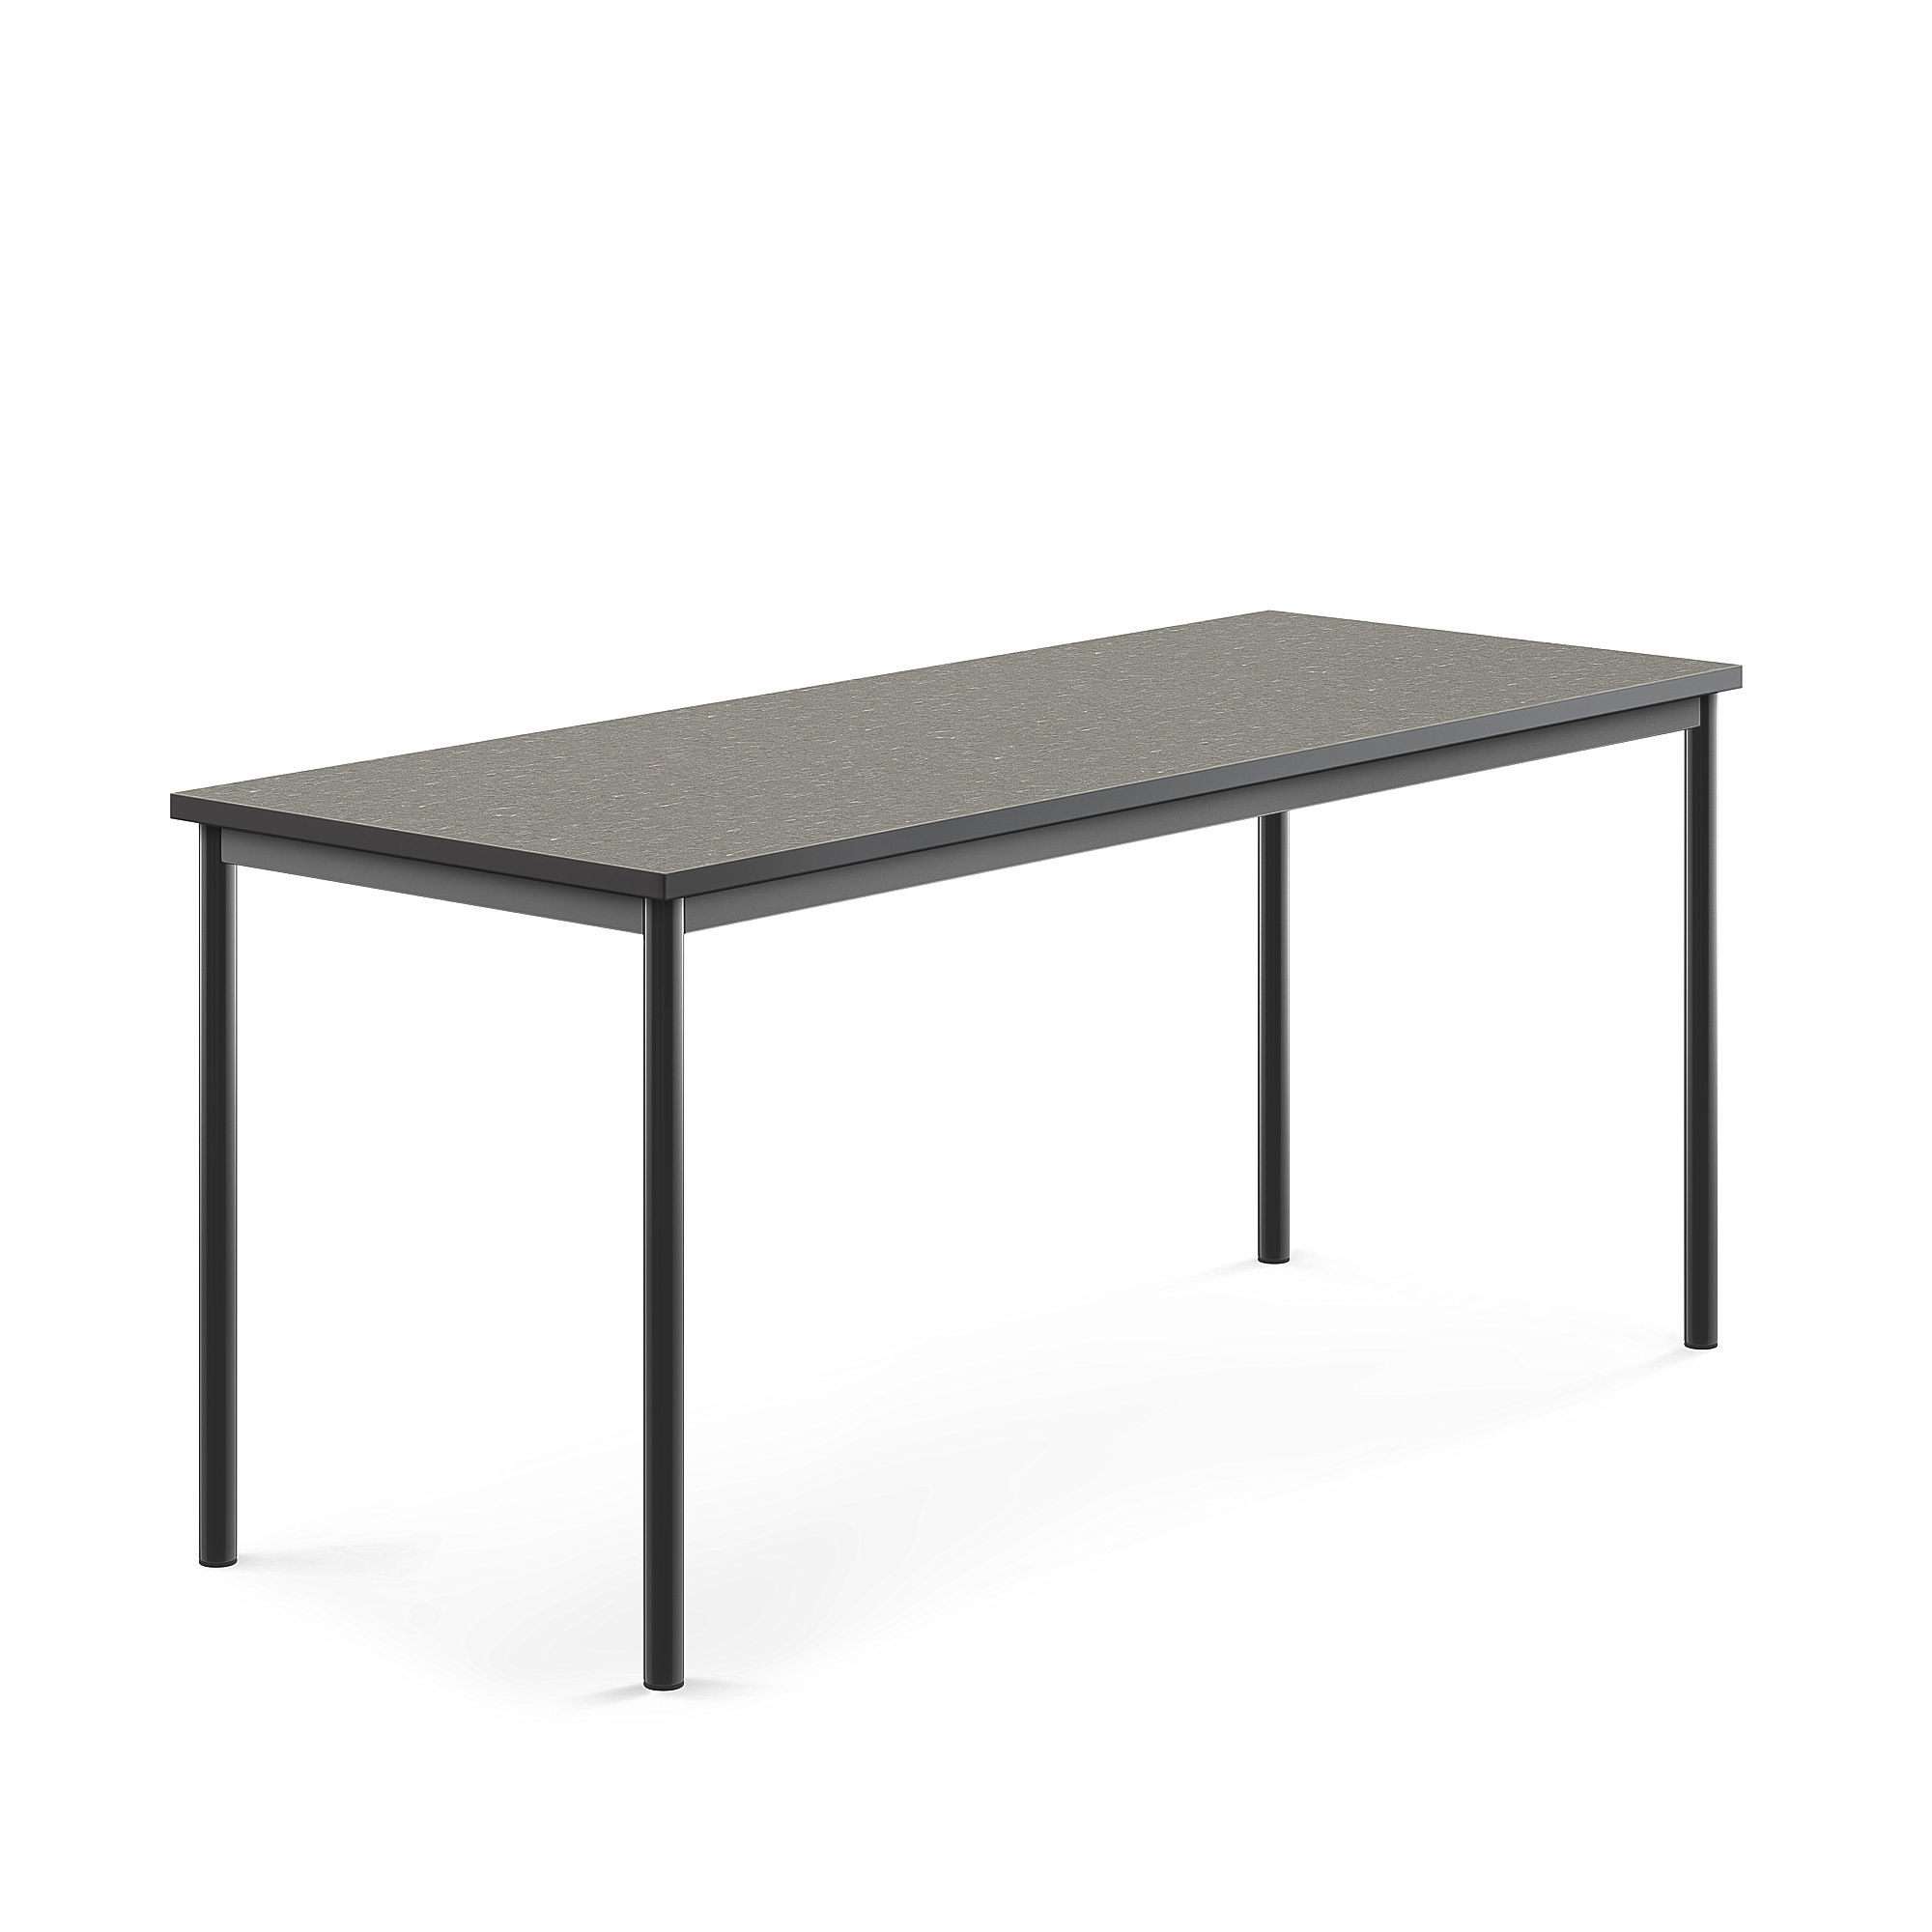 Stůl SONITUS, 1800x700x760 mm, antracitově šedé nohy, deska s linoleem, tmavě šedá